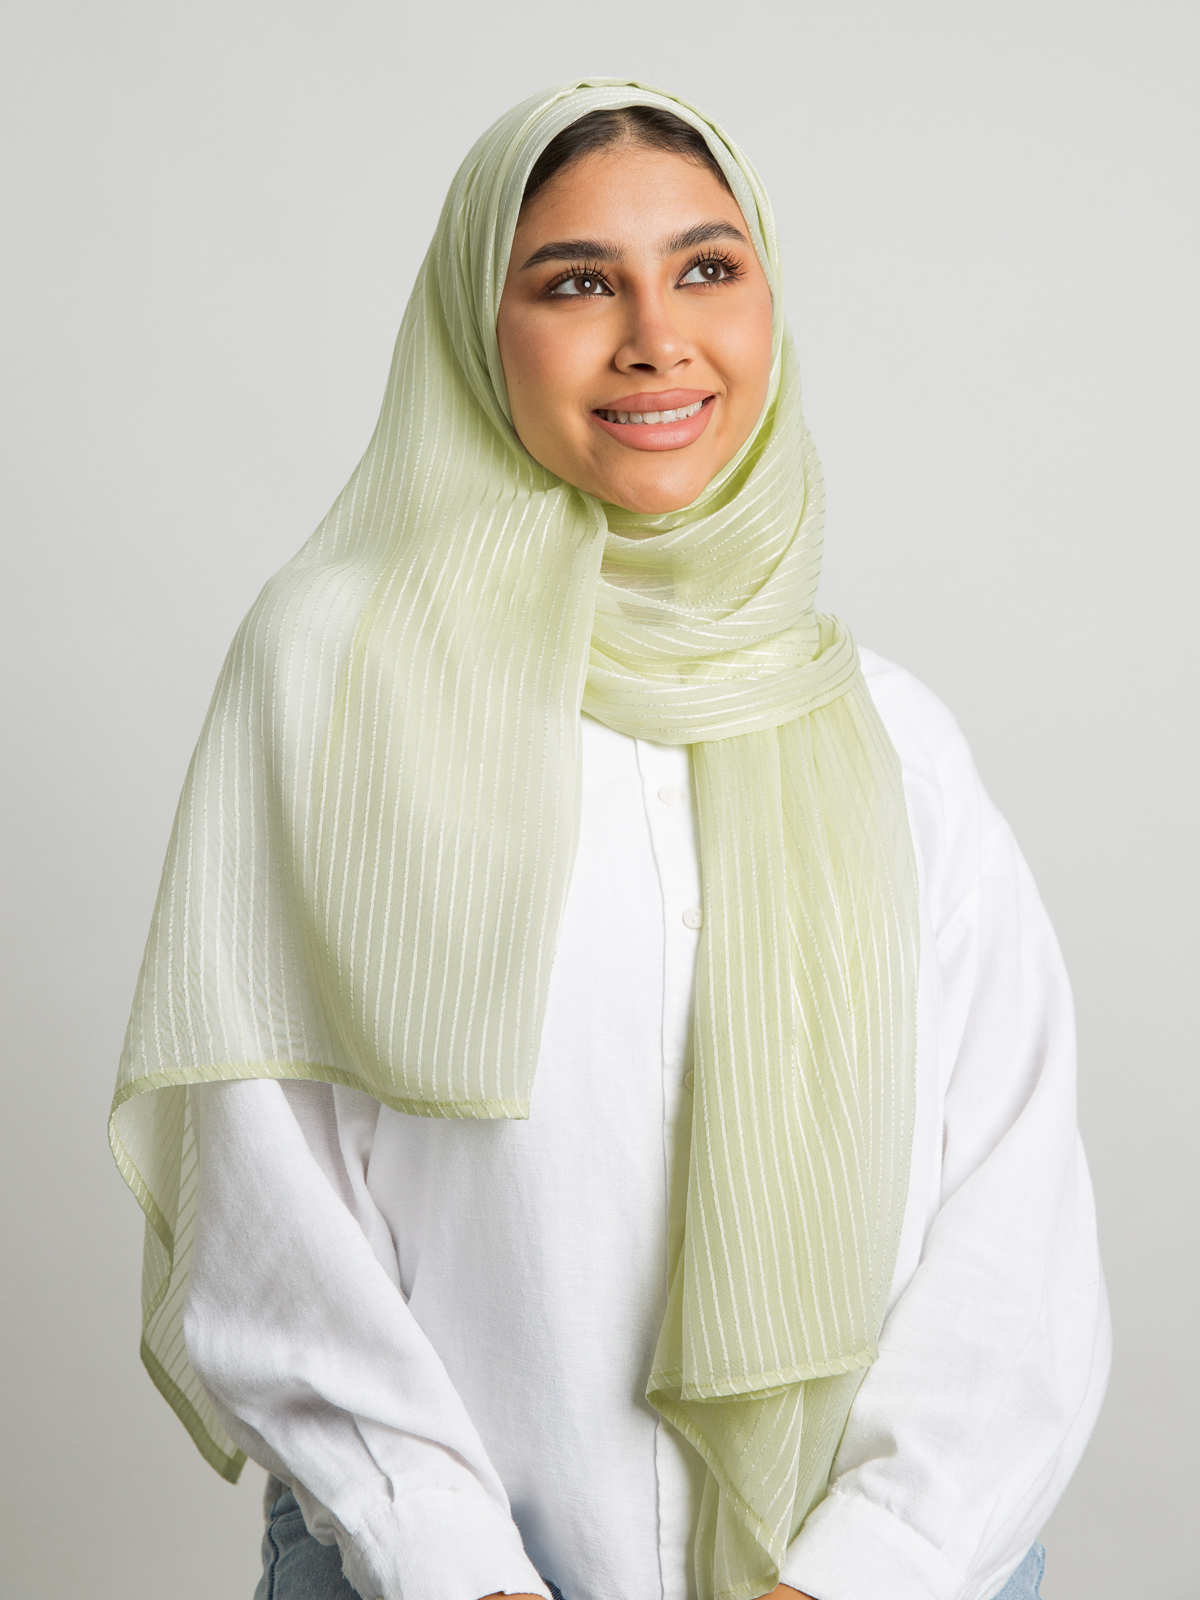 Lemonade plain striped soft chiffon laser tarha by kaafmeem hijab for daily wear available in multiple colors